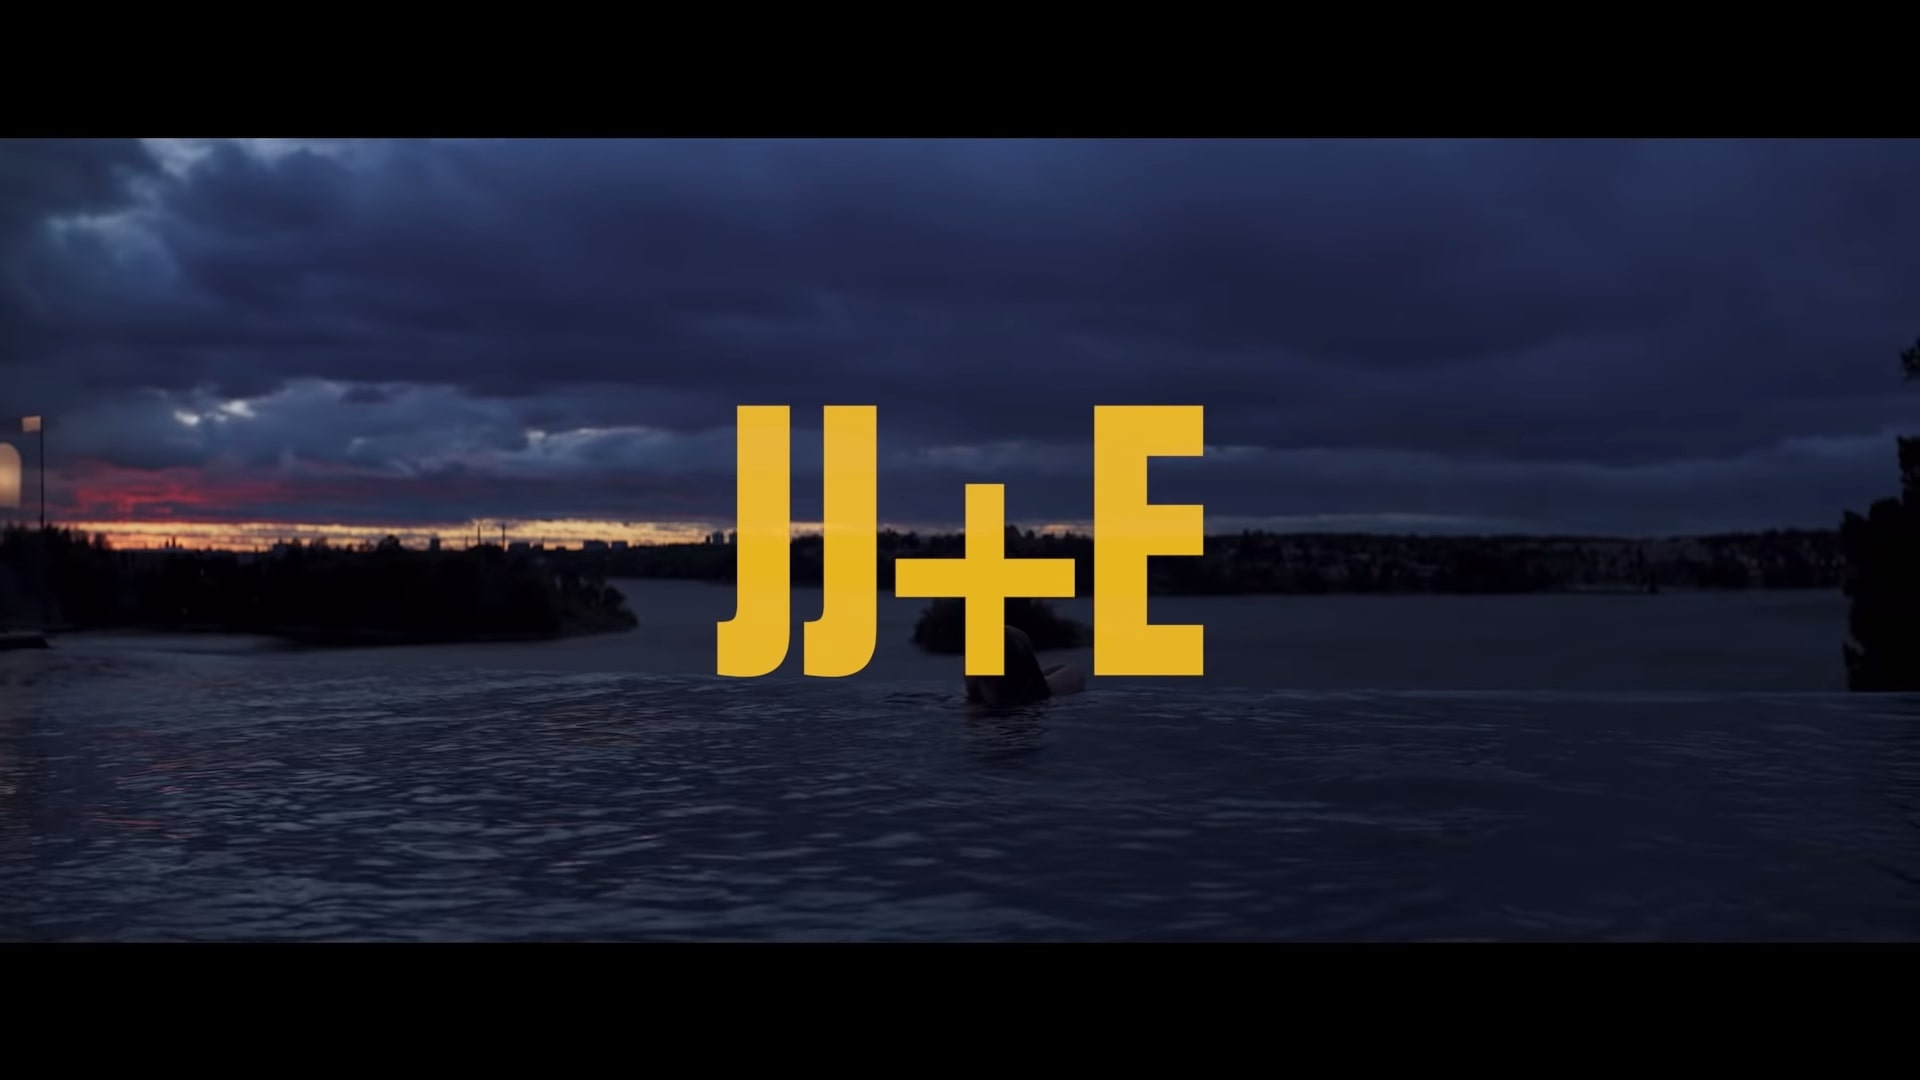 Netflix JJ+E Trailer, Coming to Netflix in September 2021